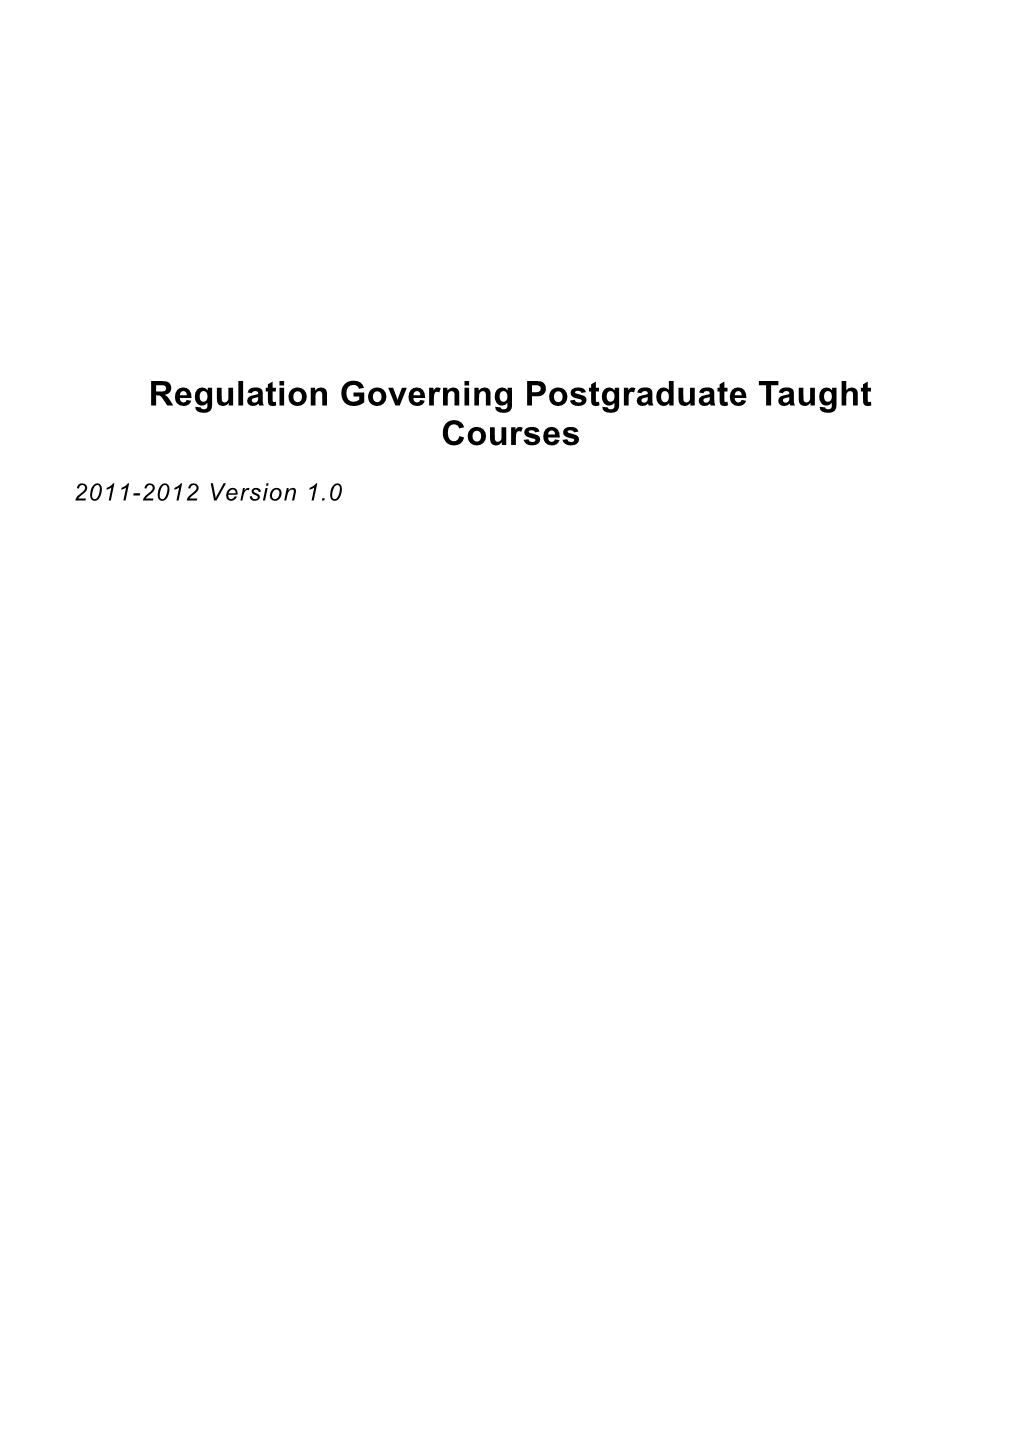 Regulation Governing Postgraduate Taught Courses